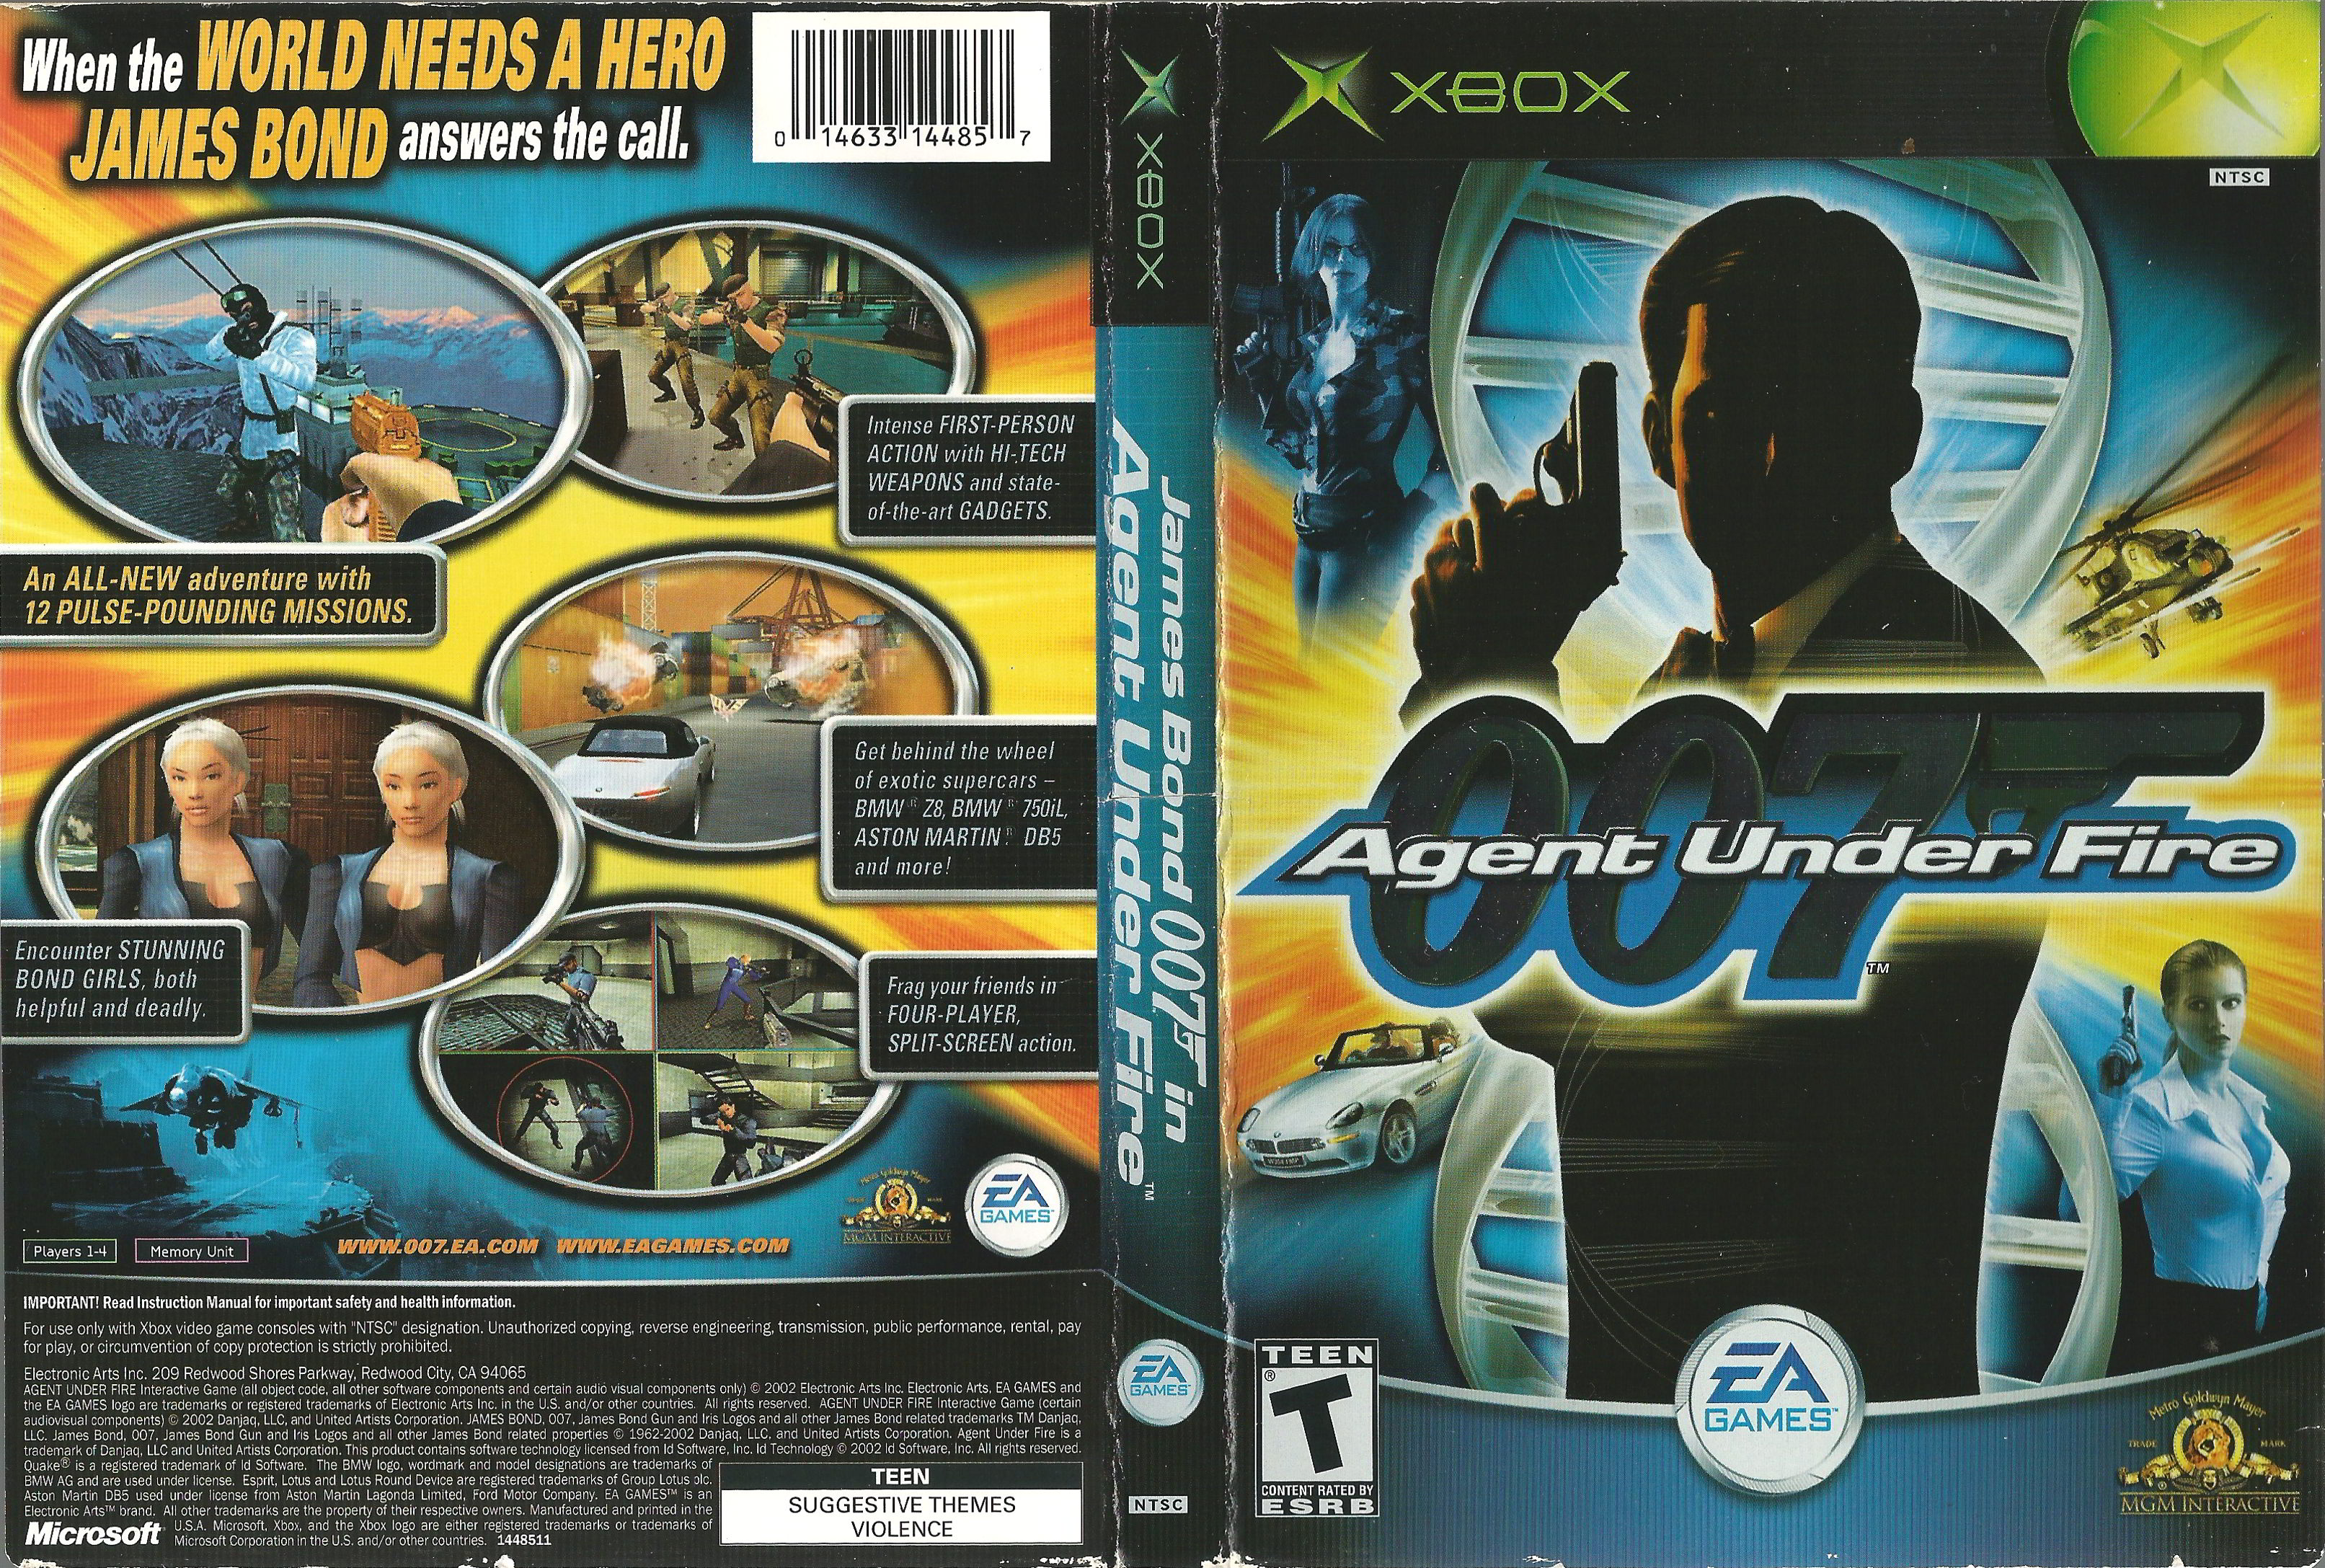 James Bond 007: Agent Under Fire #19